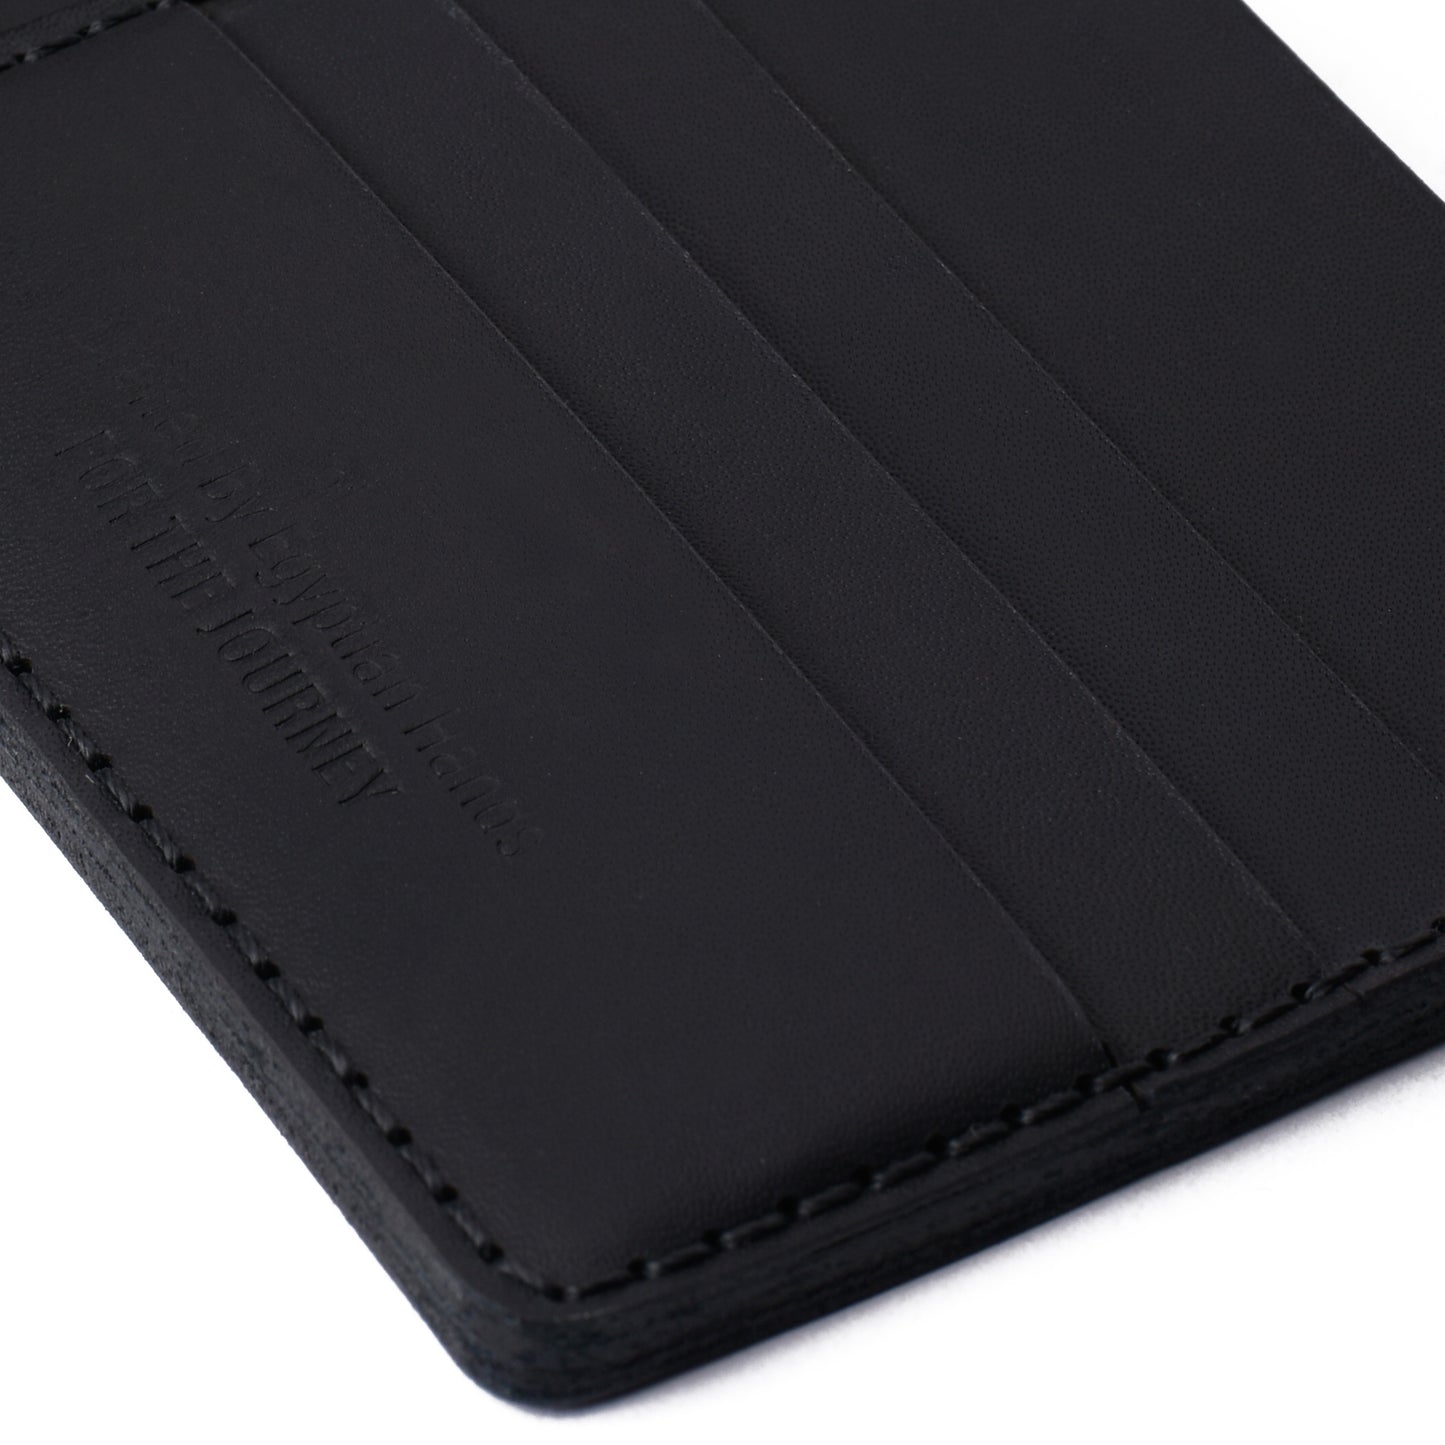 Black bifold leather wallet